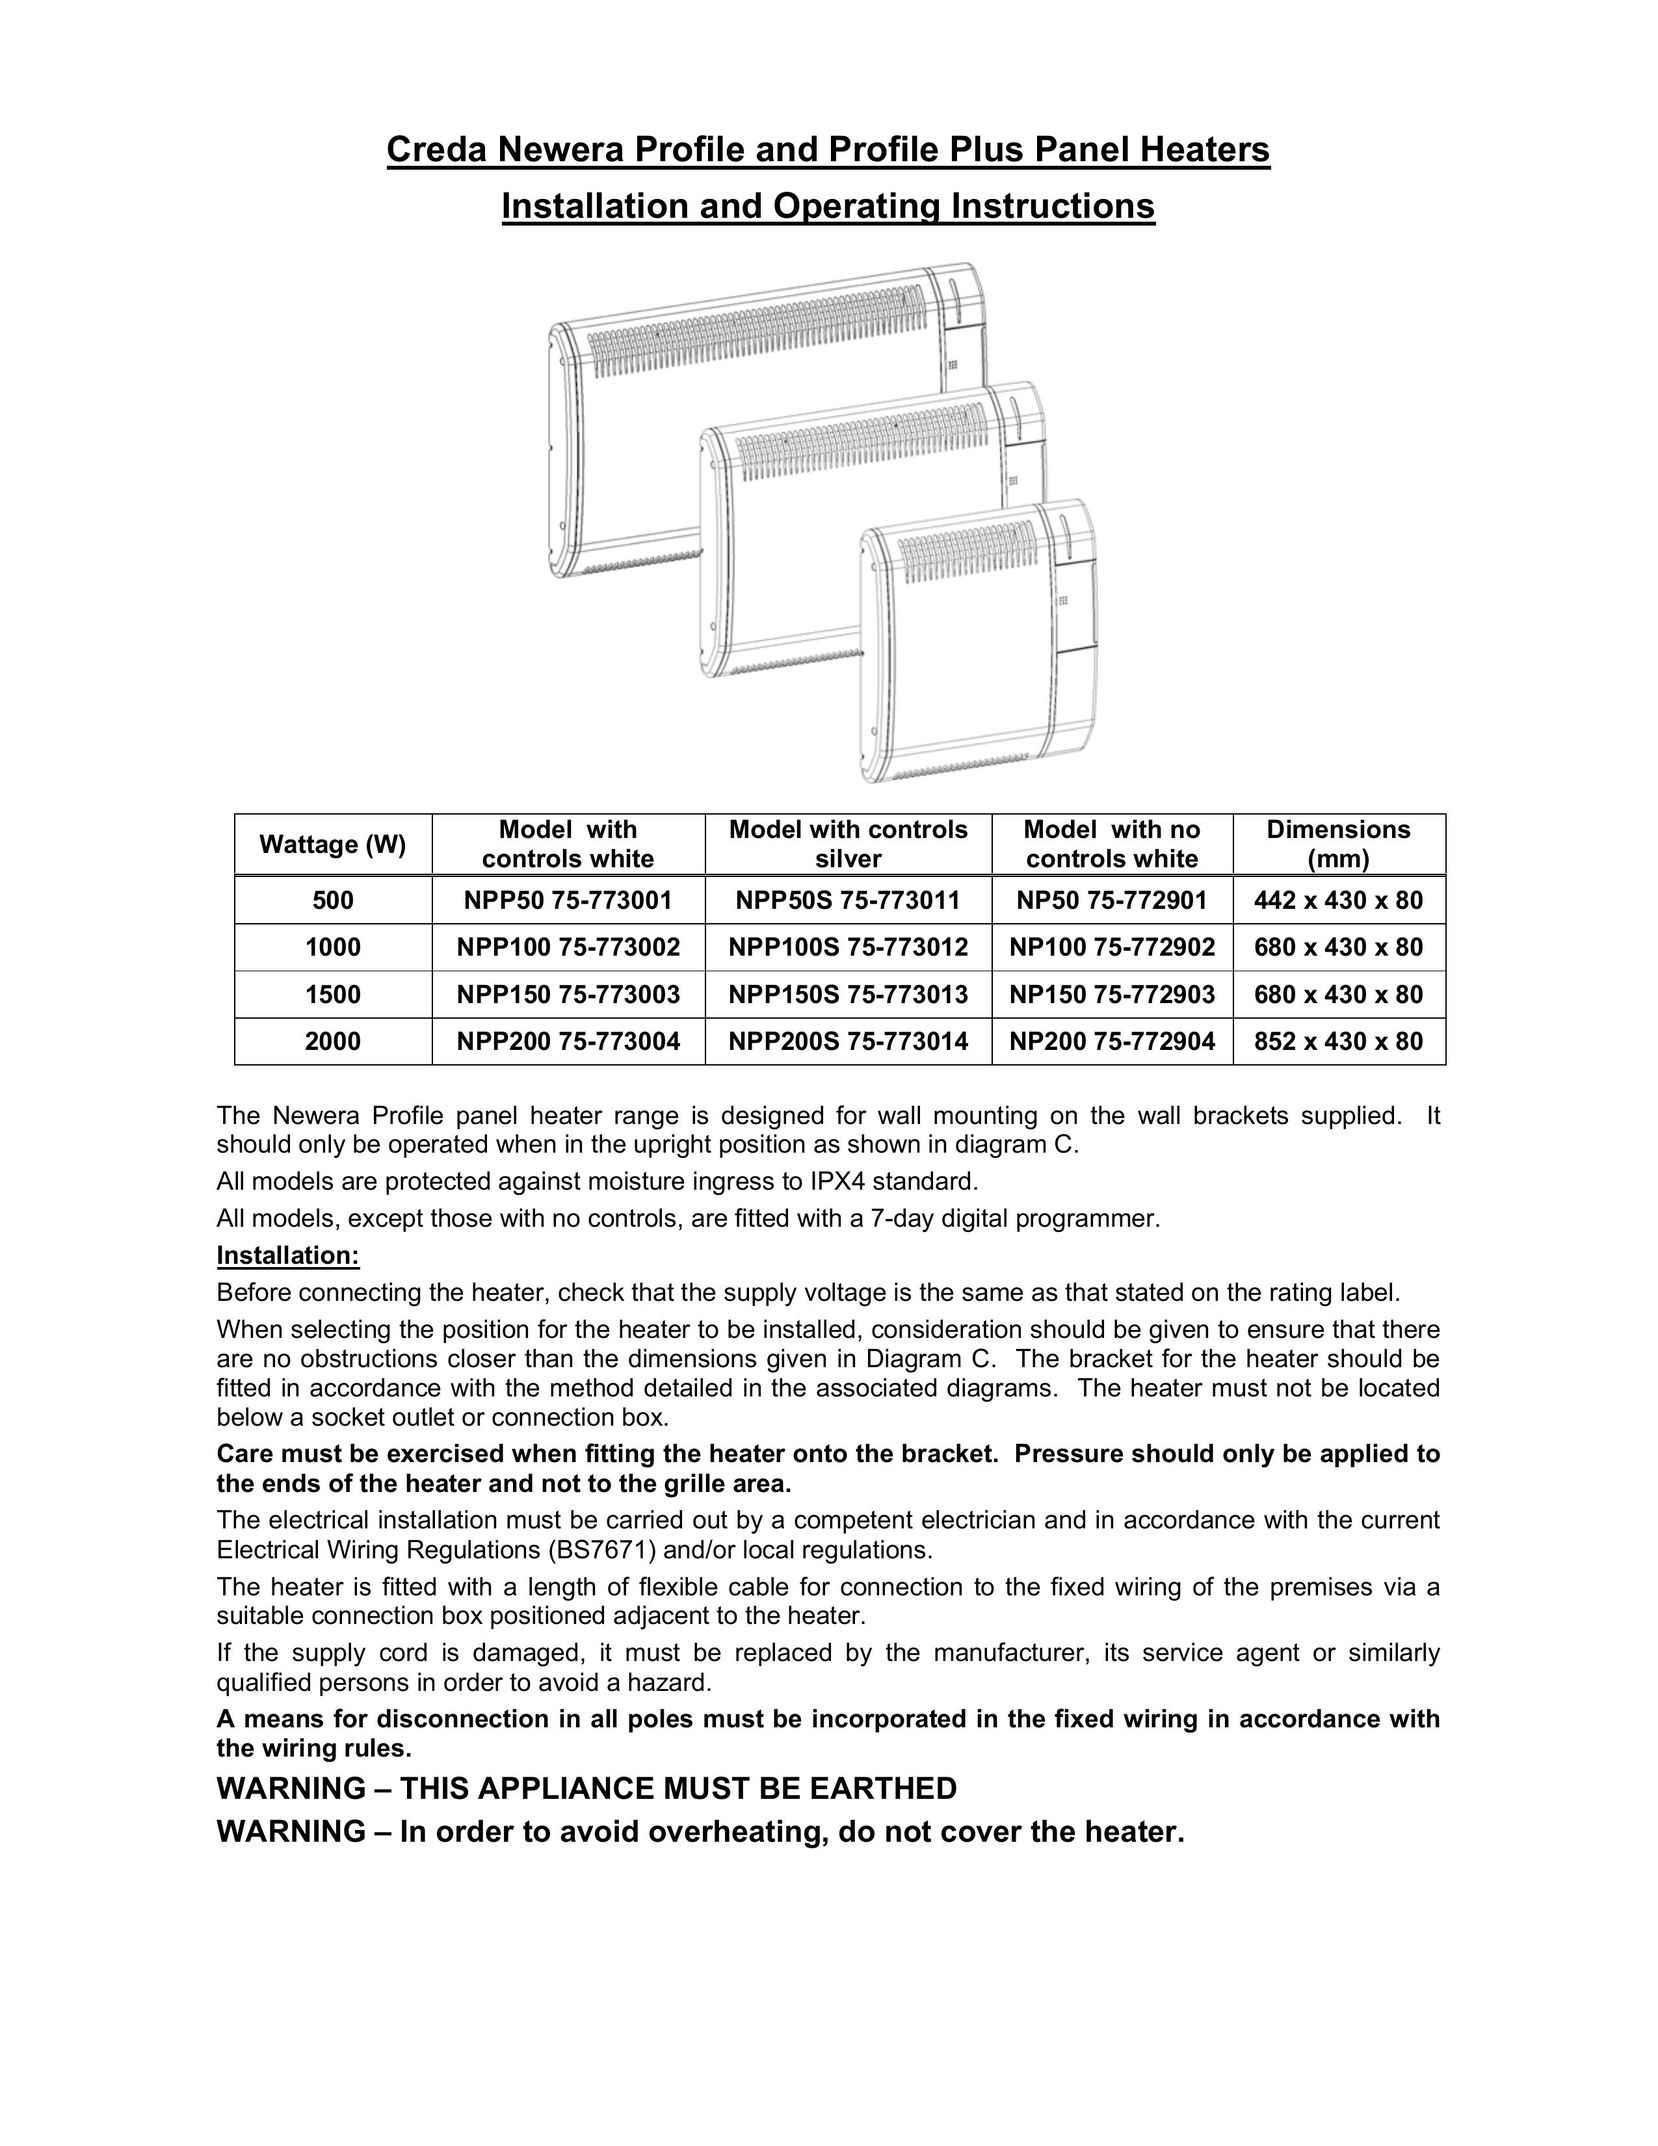 Creda NPP100S 75-773012 Air Conditioner User Manual